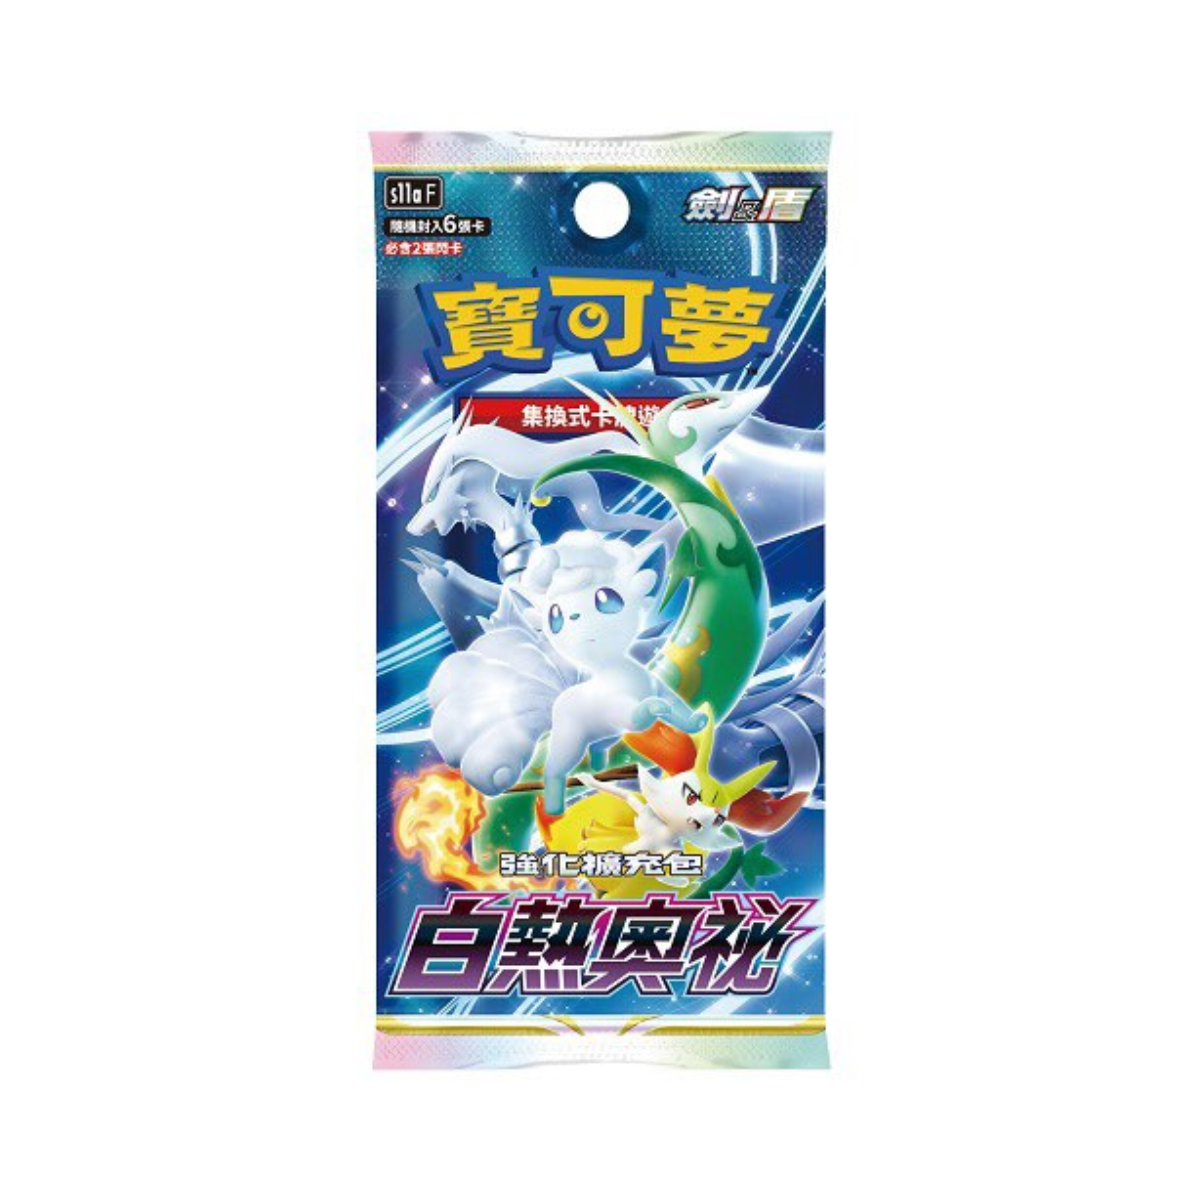 Pokemon TCG 剑 & 盾 强化擴充包 白熱奧秘 [S11aF] (Chinese)-Single Pack (Random)-The Pokémon Company International-Ace Cards & Collectibles